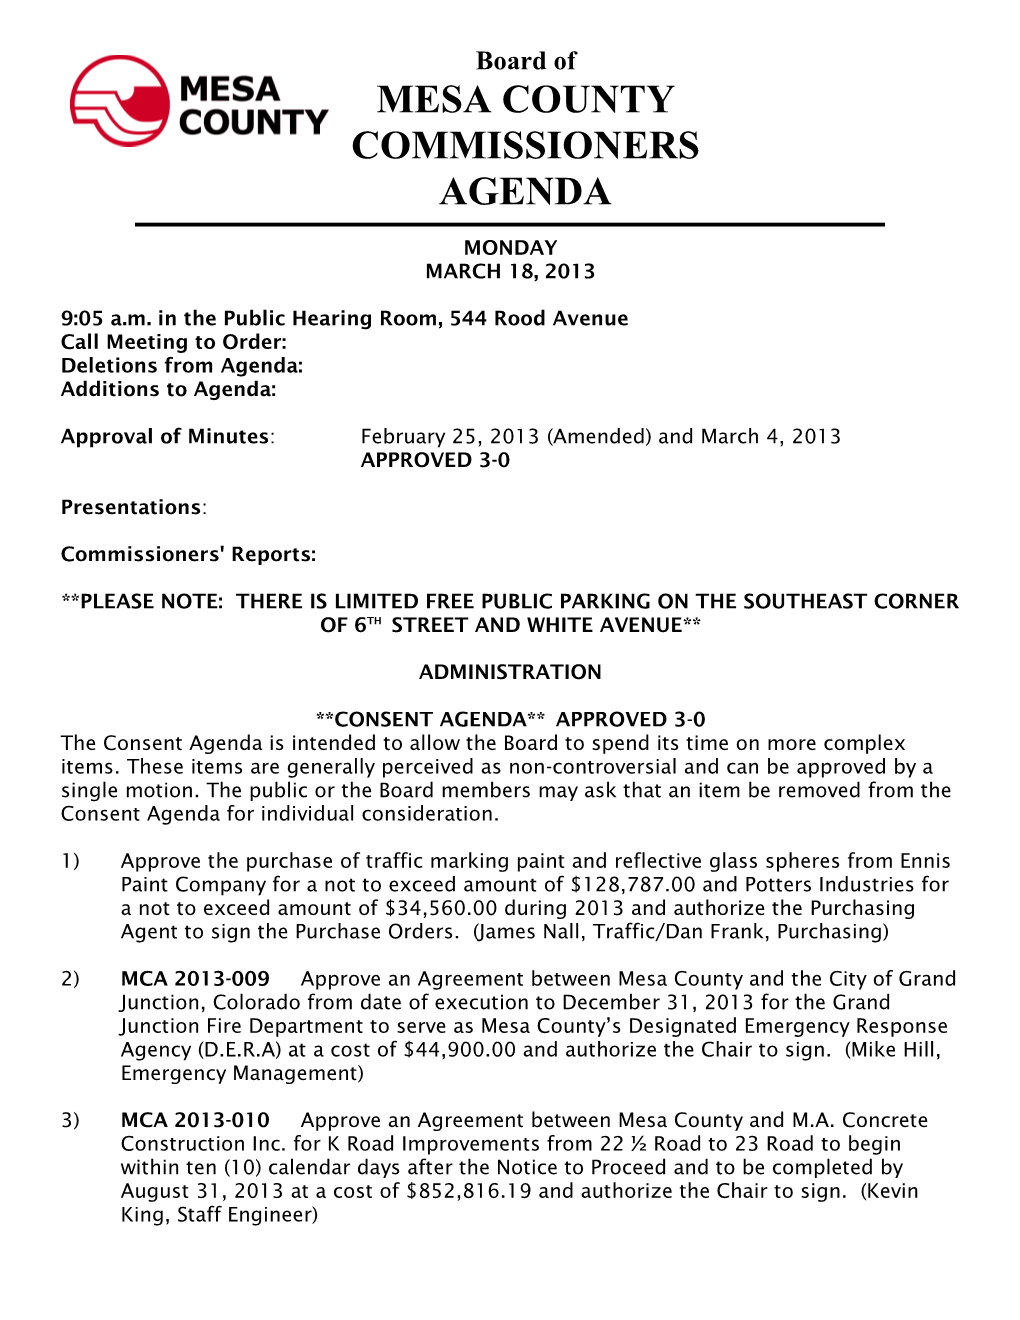 Mesa County Commissioners Agenda